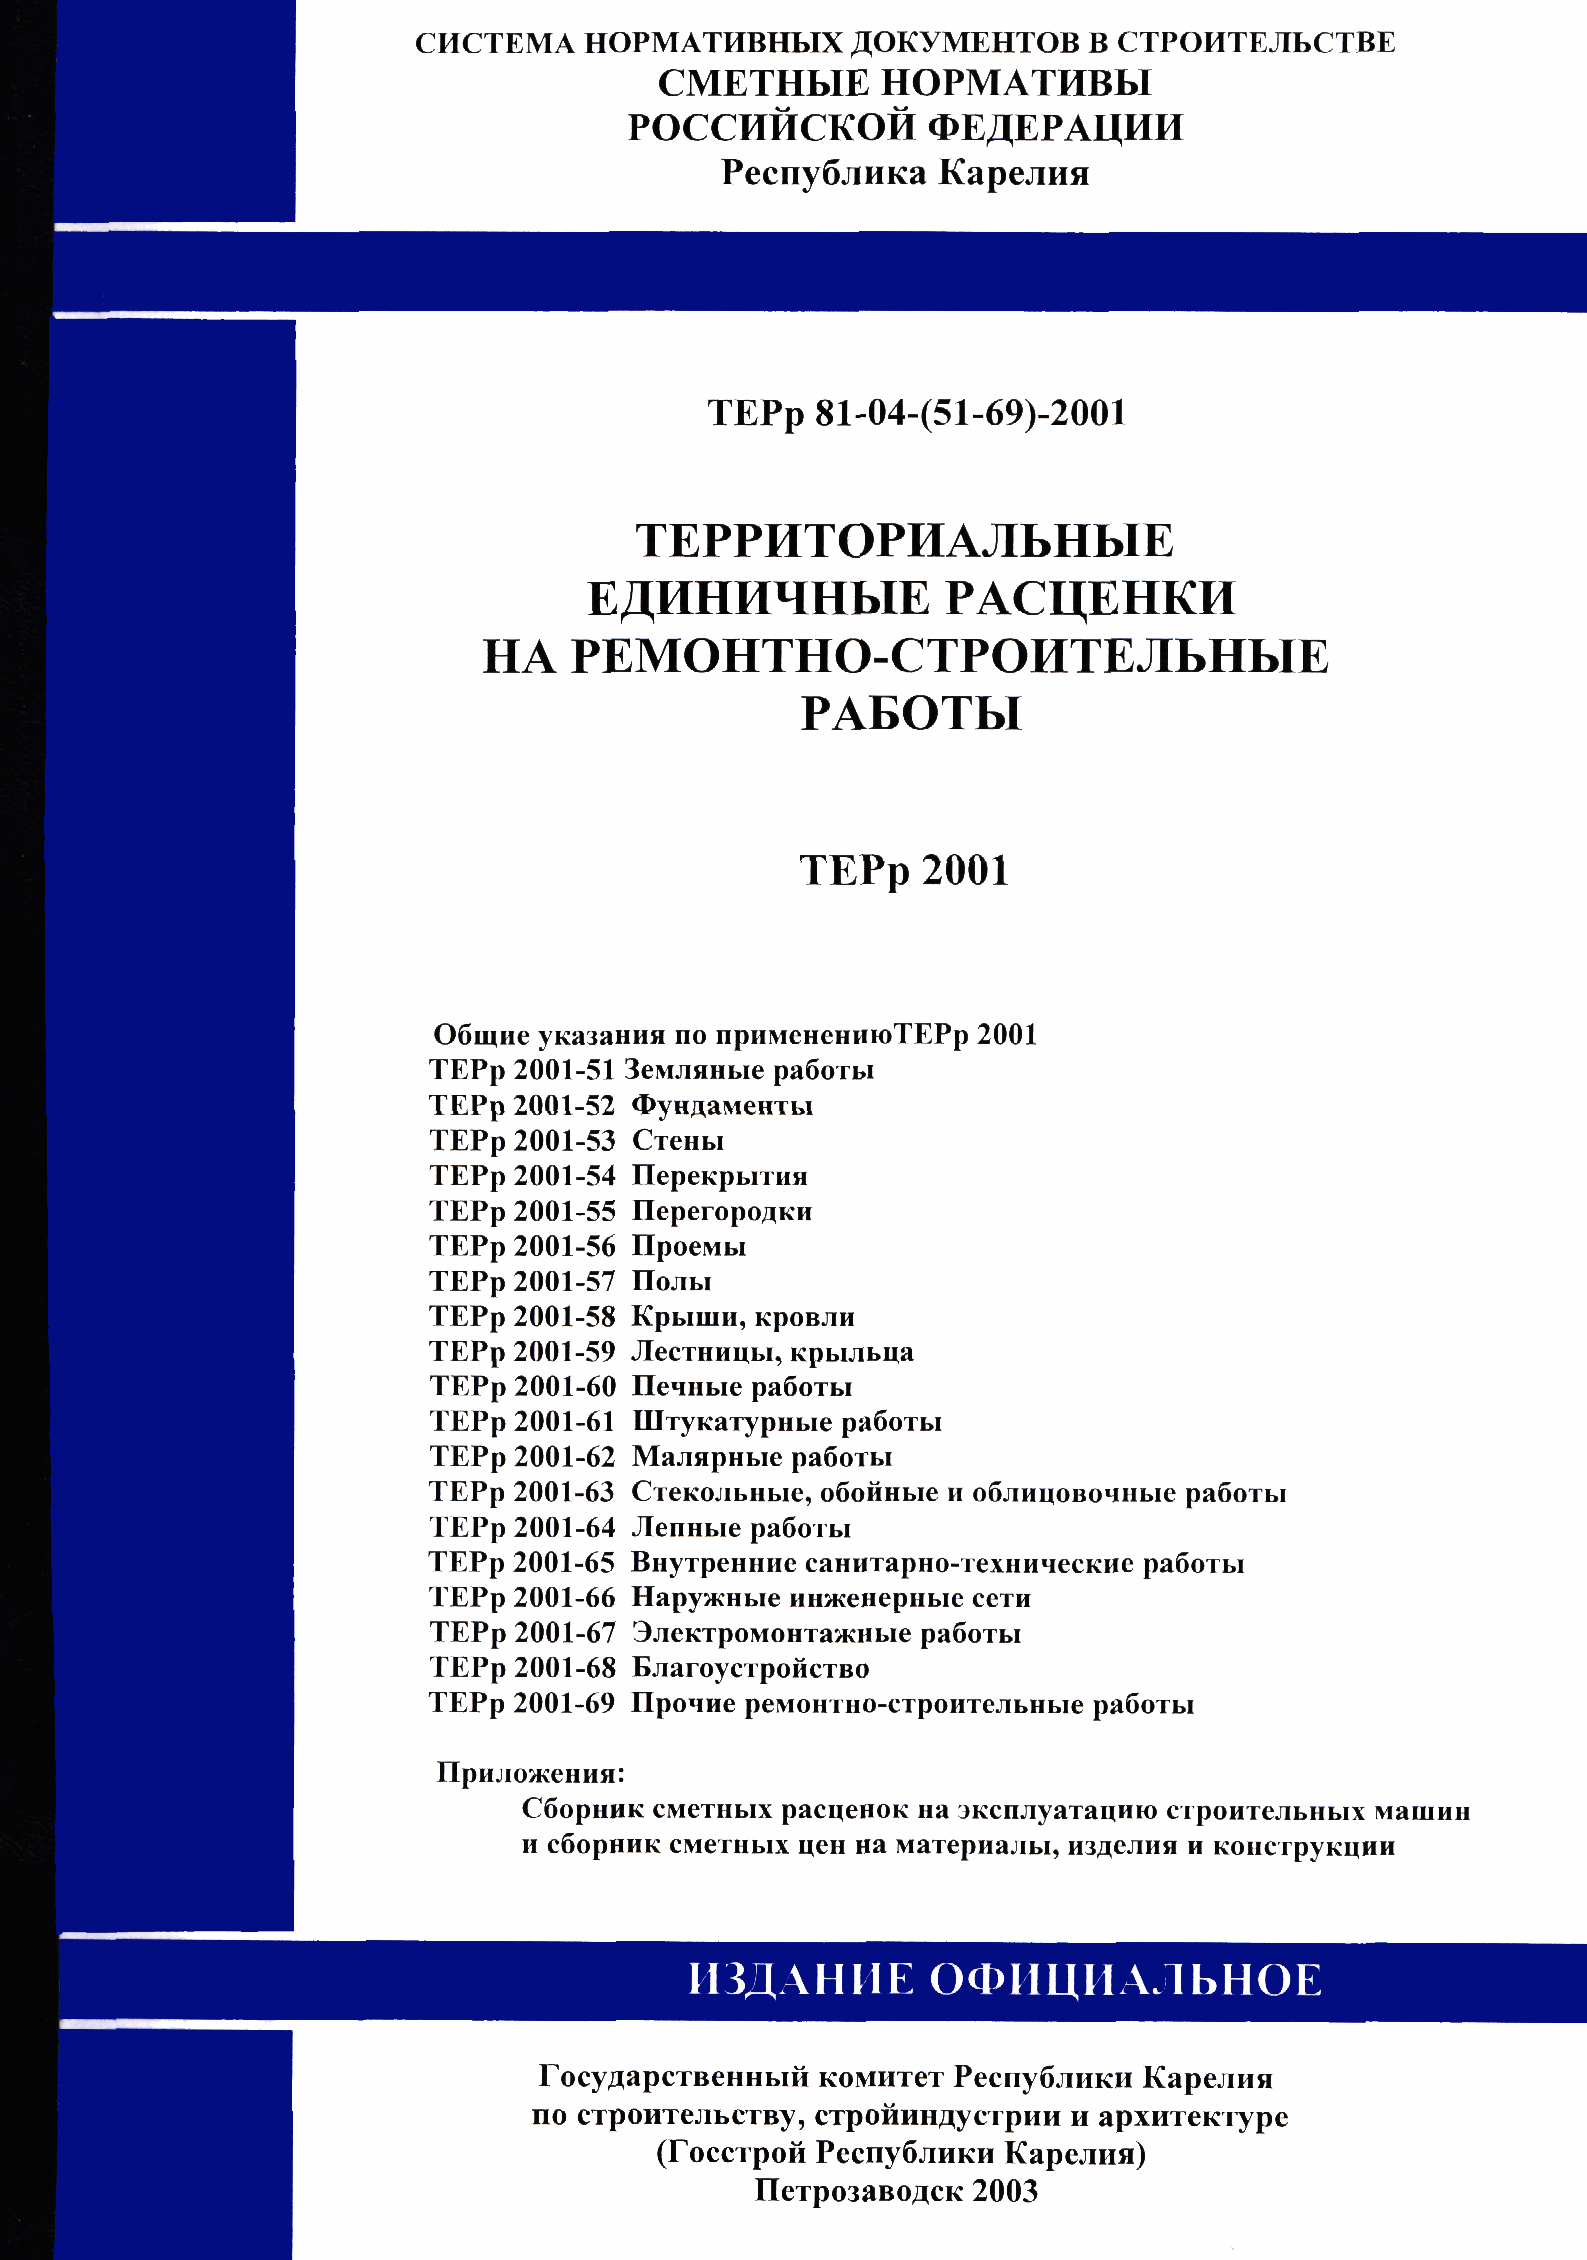 ТЕРр Республика Карелия 2001-67